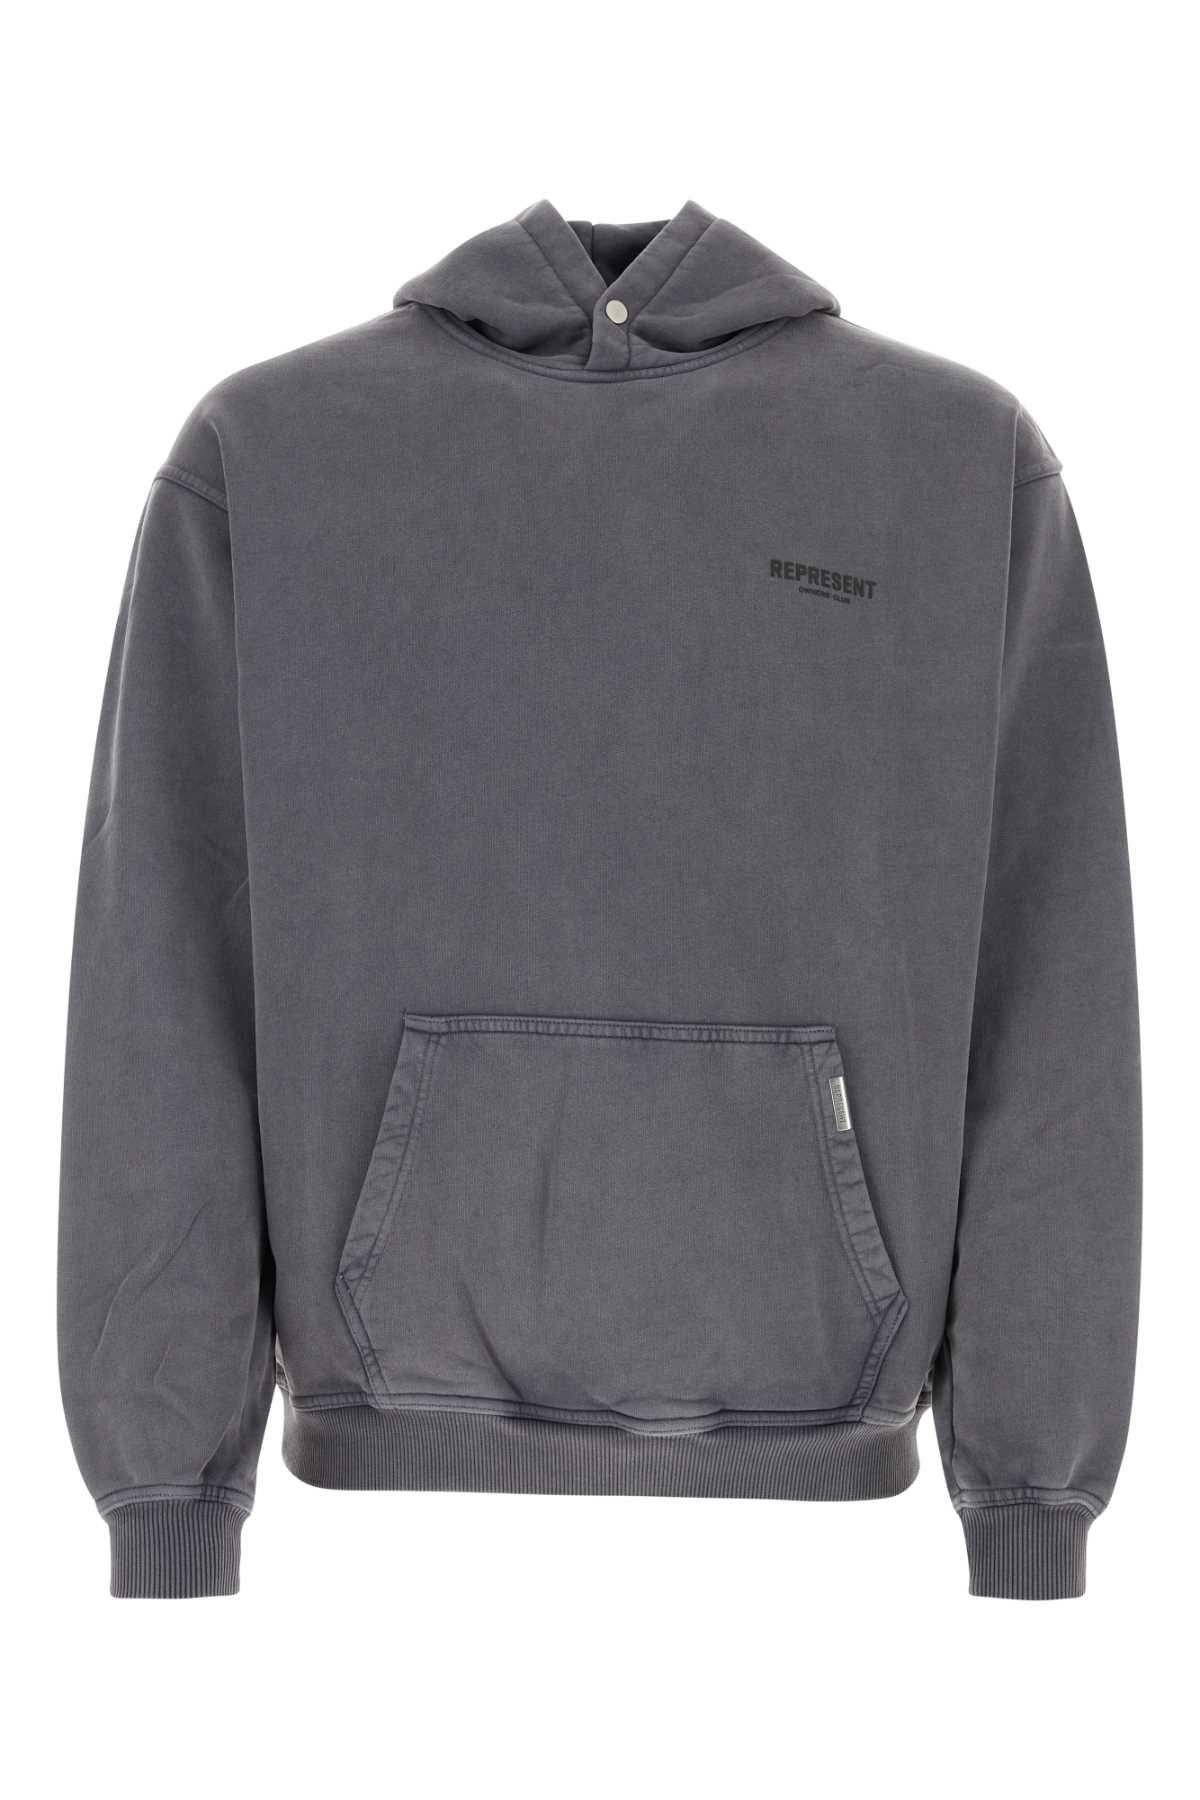 Shop Represent Charcoal Cotton Sweatshirt In Storm